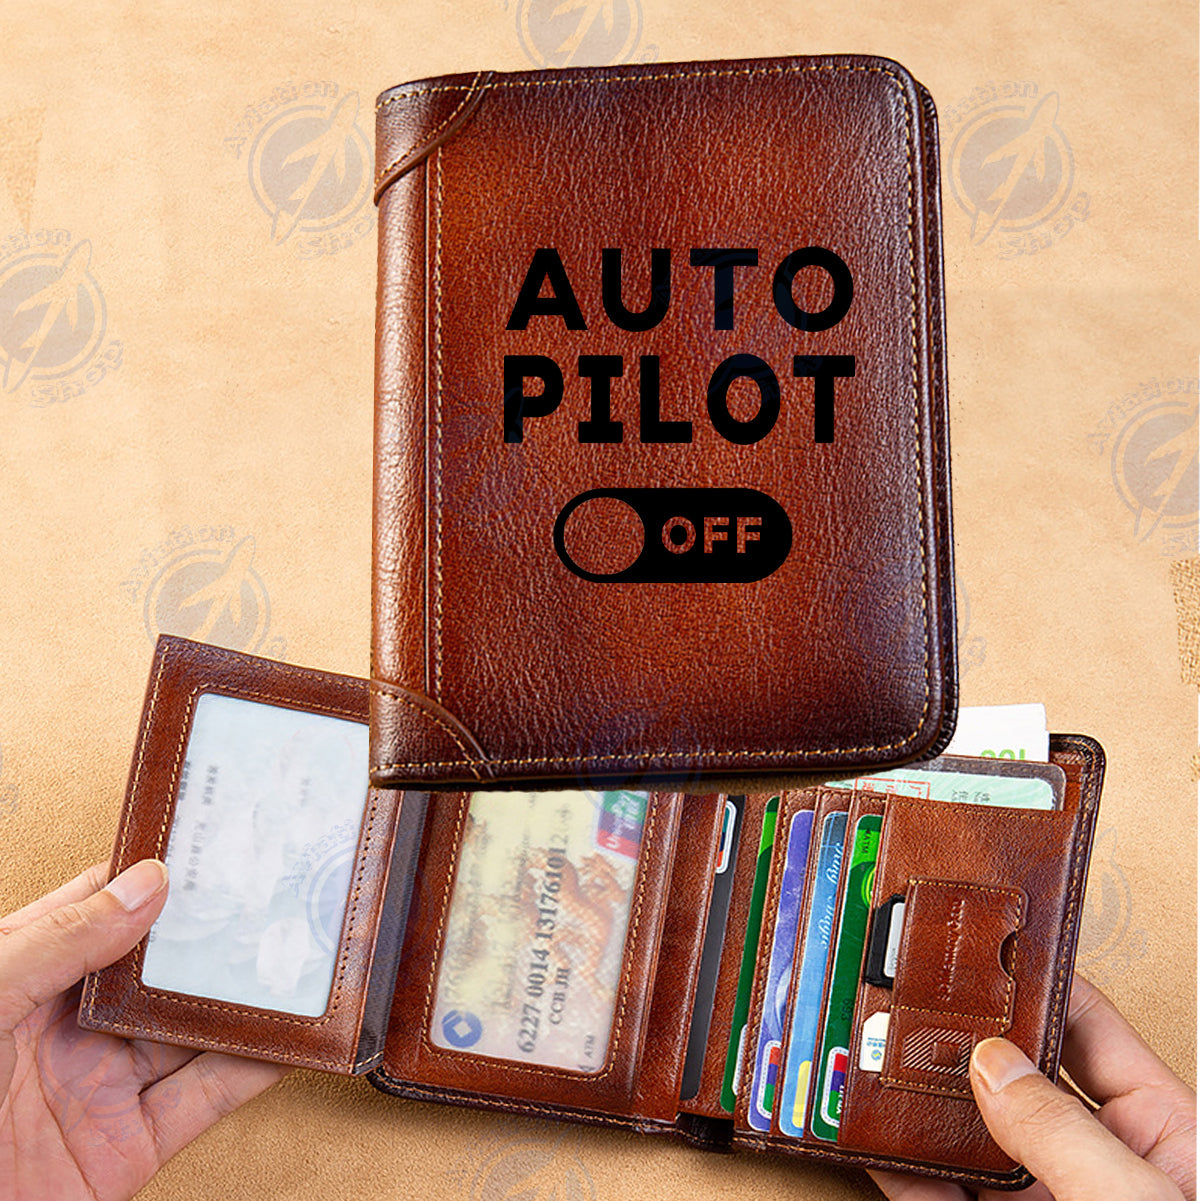 Auto Pilot Off Designed Leather Wallets